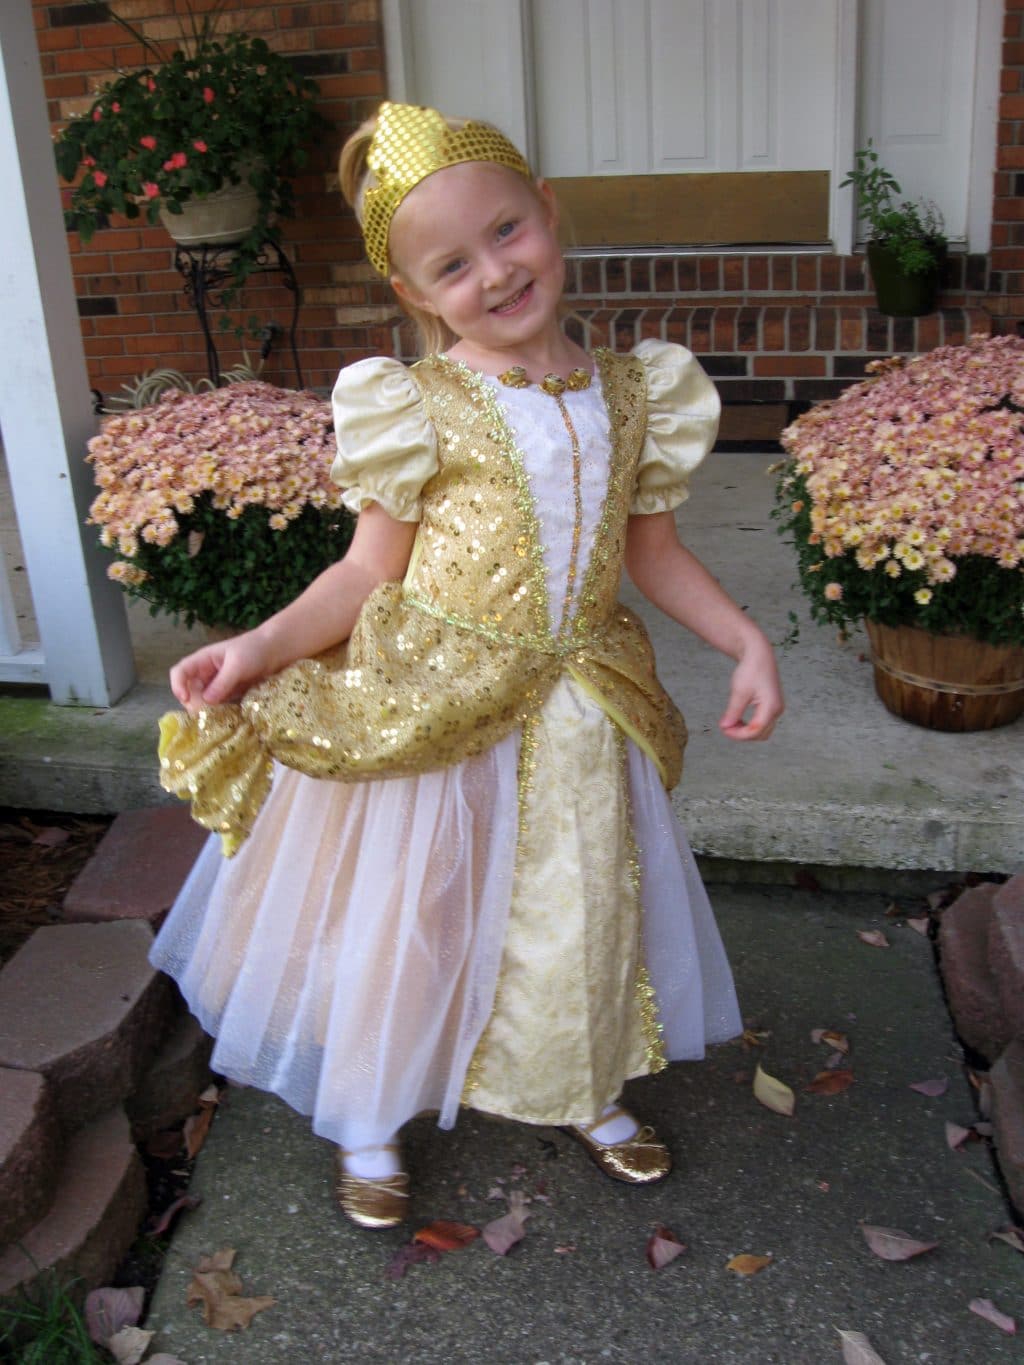 Princess Dress-Up Day At Preschool - All Things Mamma